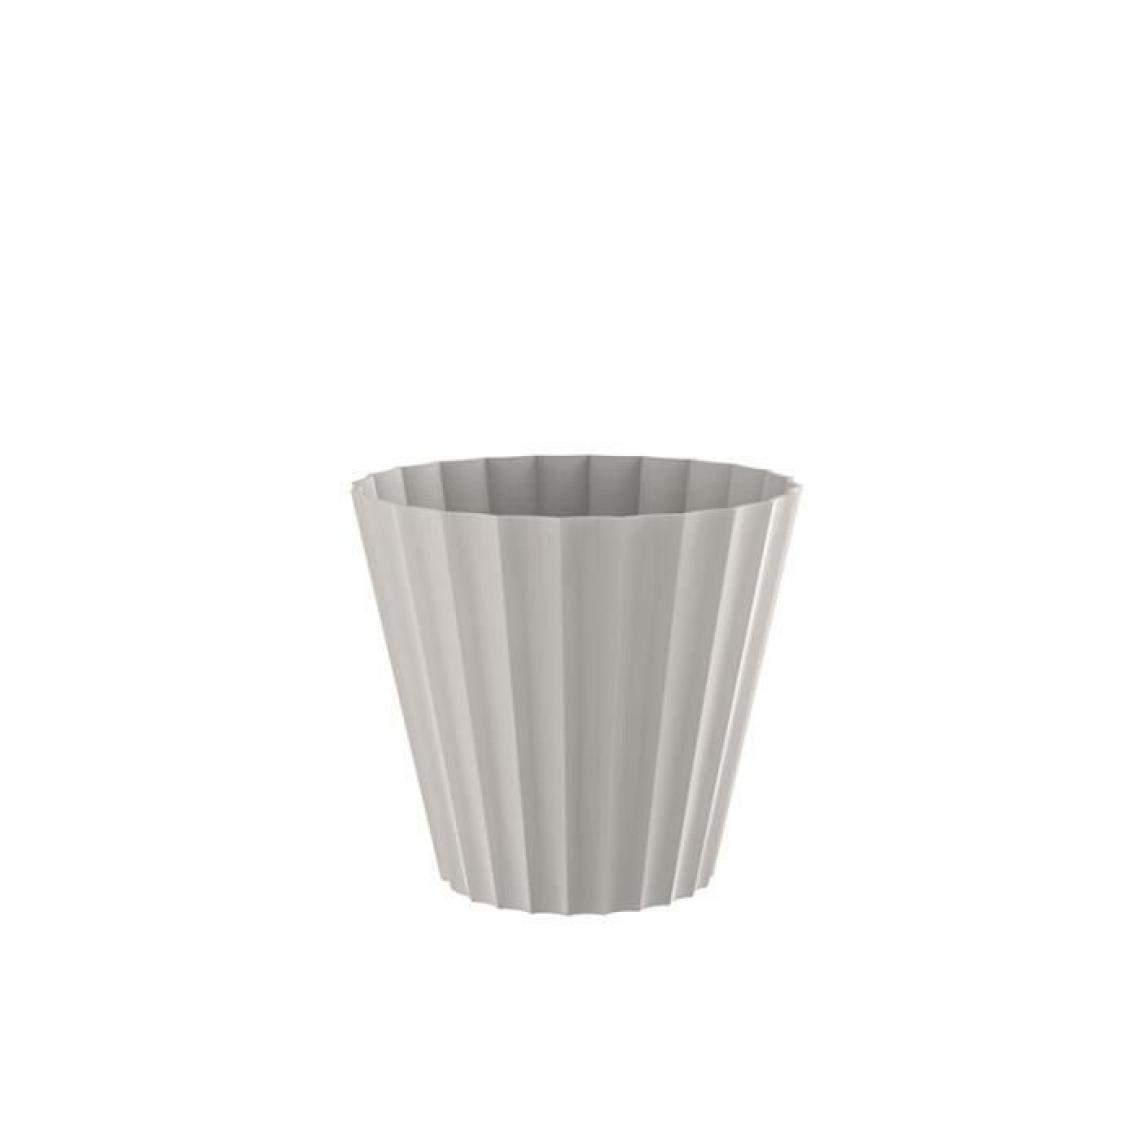 Plastiken - PLASTIKEN Pot Doric Maceta - Ø18 x 16 cm - Blanc - Pots, cache-pots